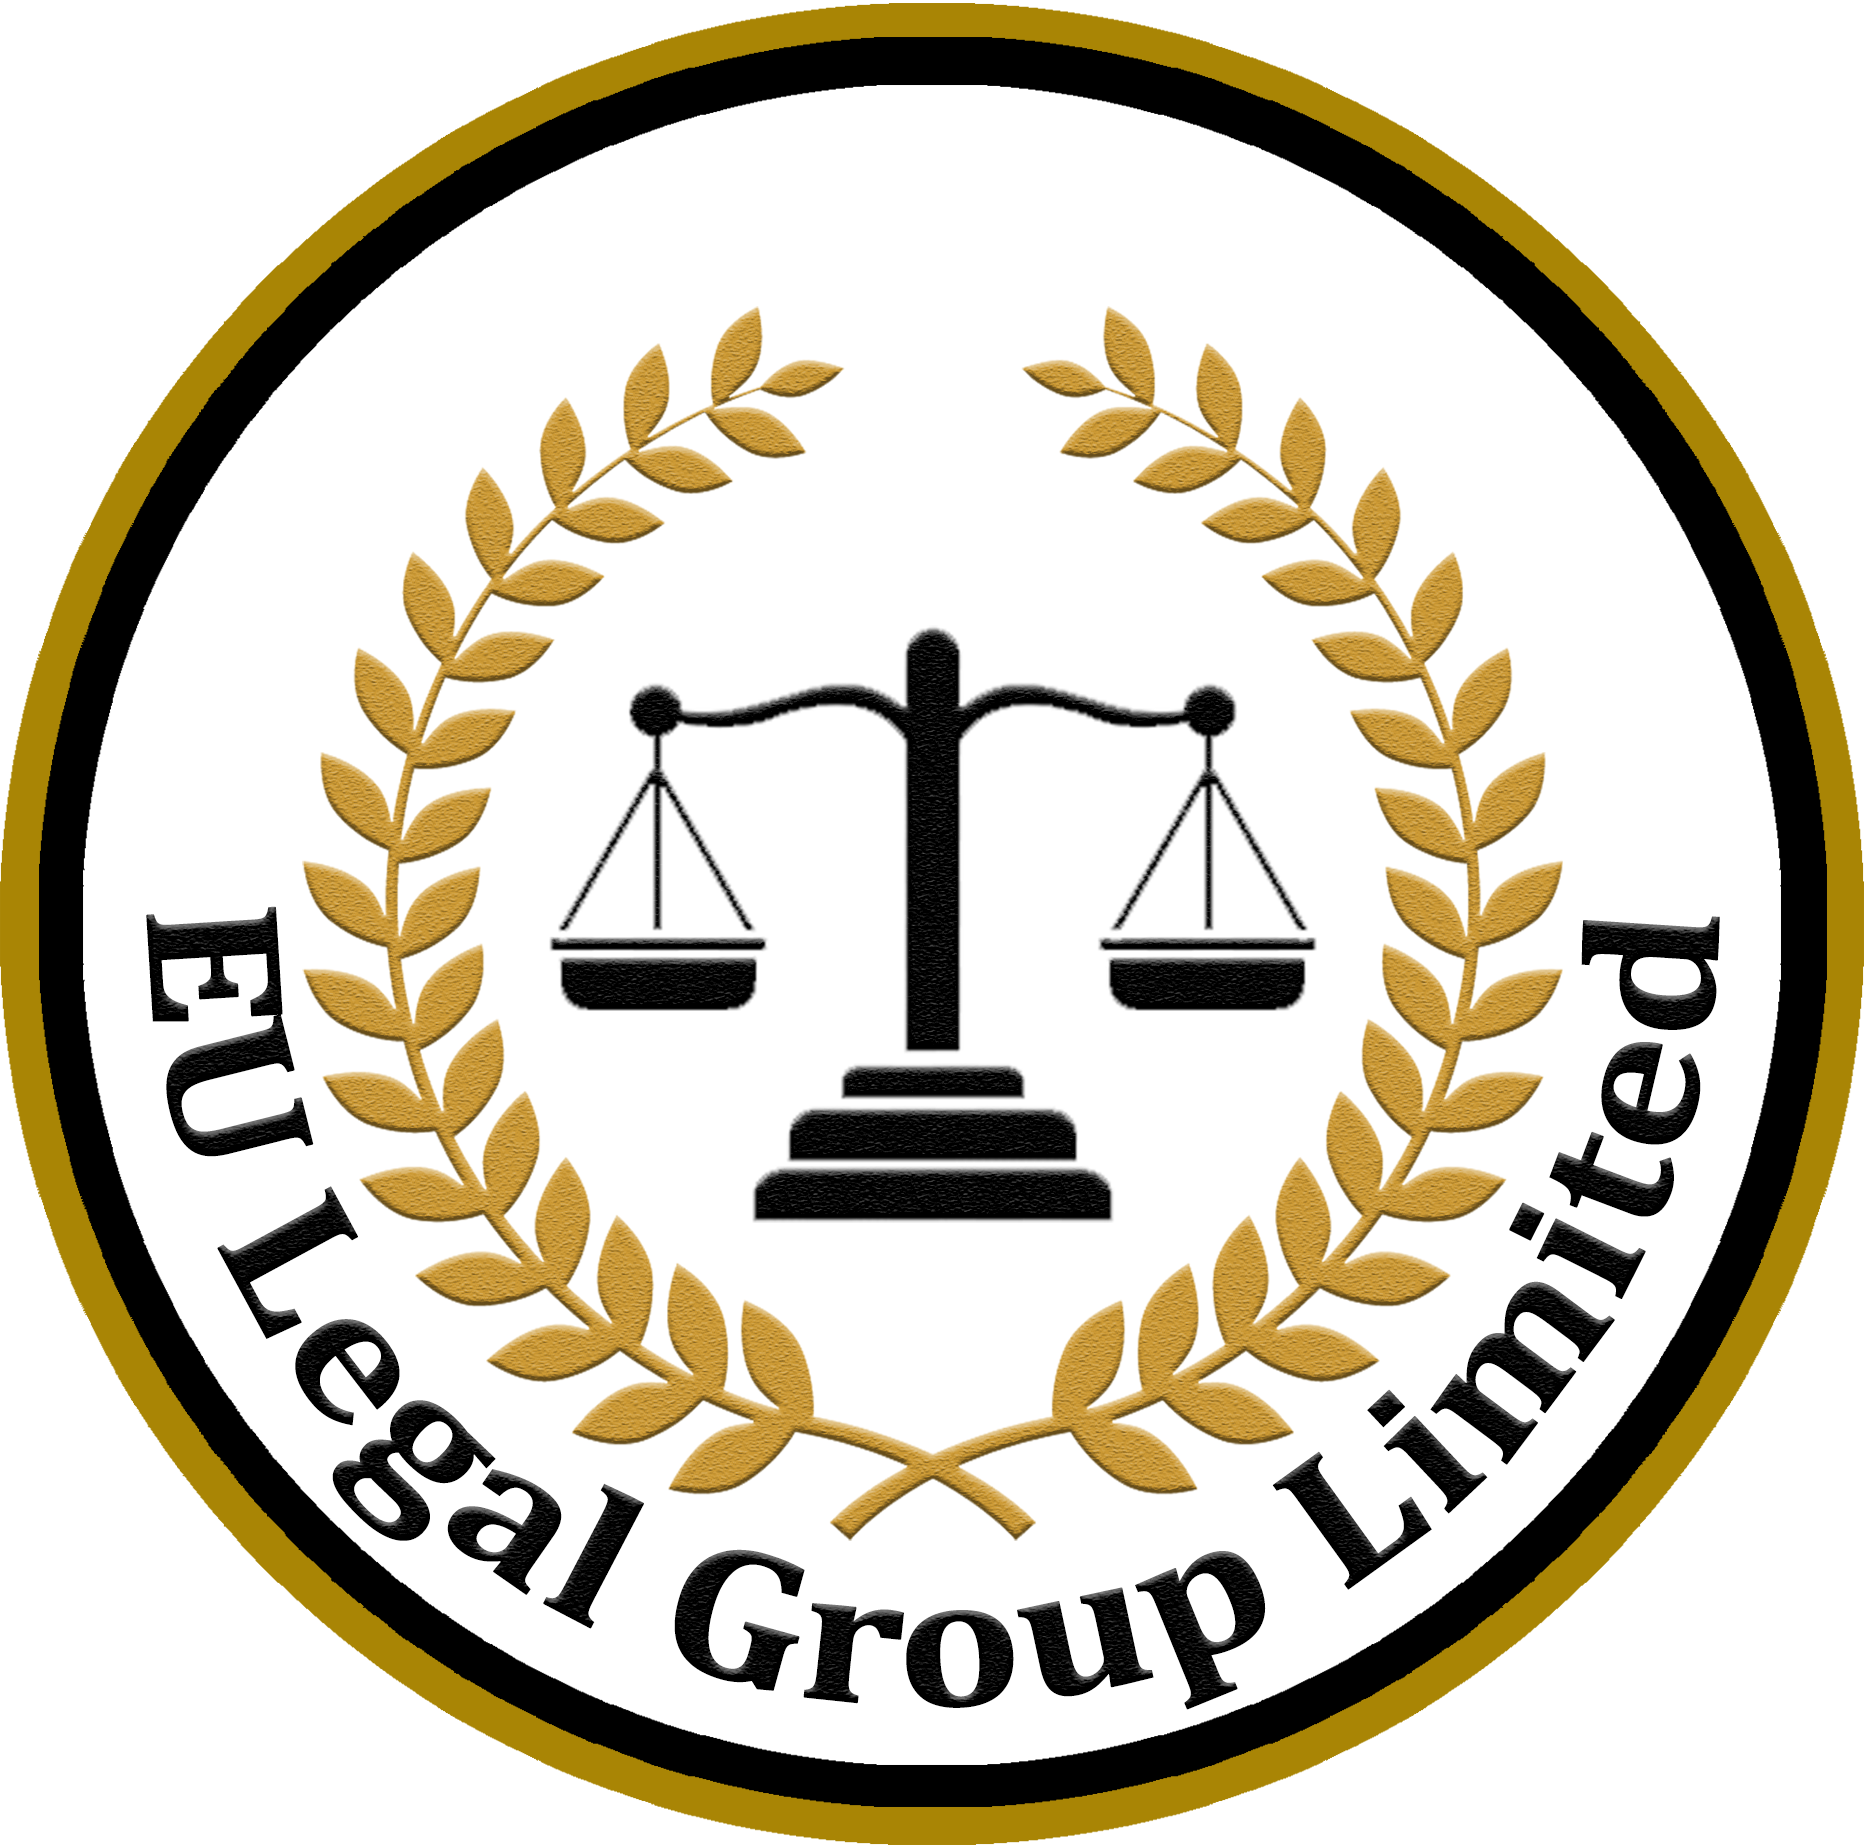 EU Legal Group Limited